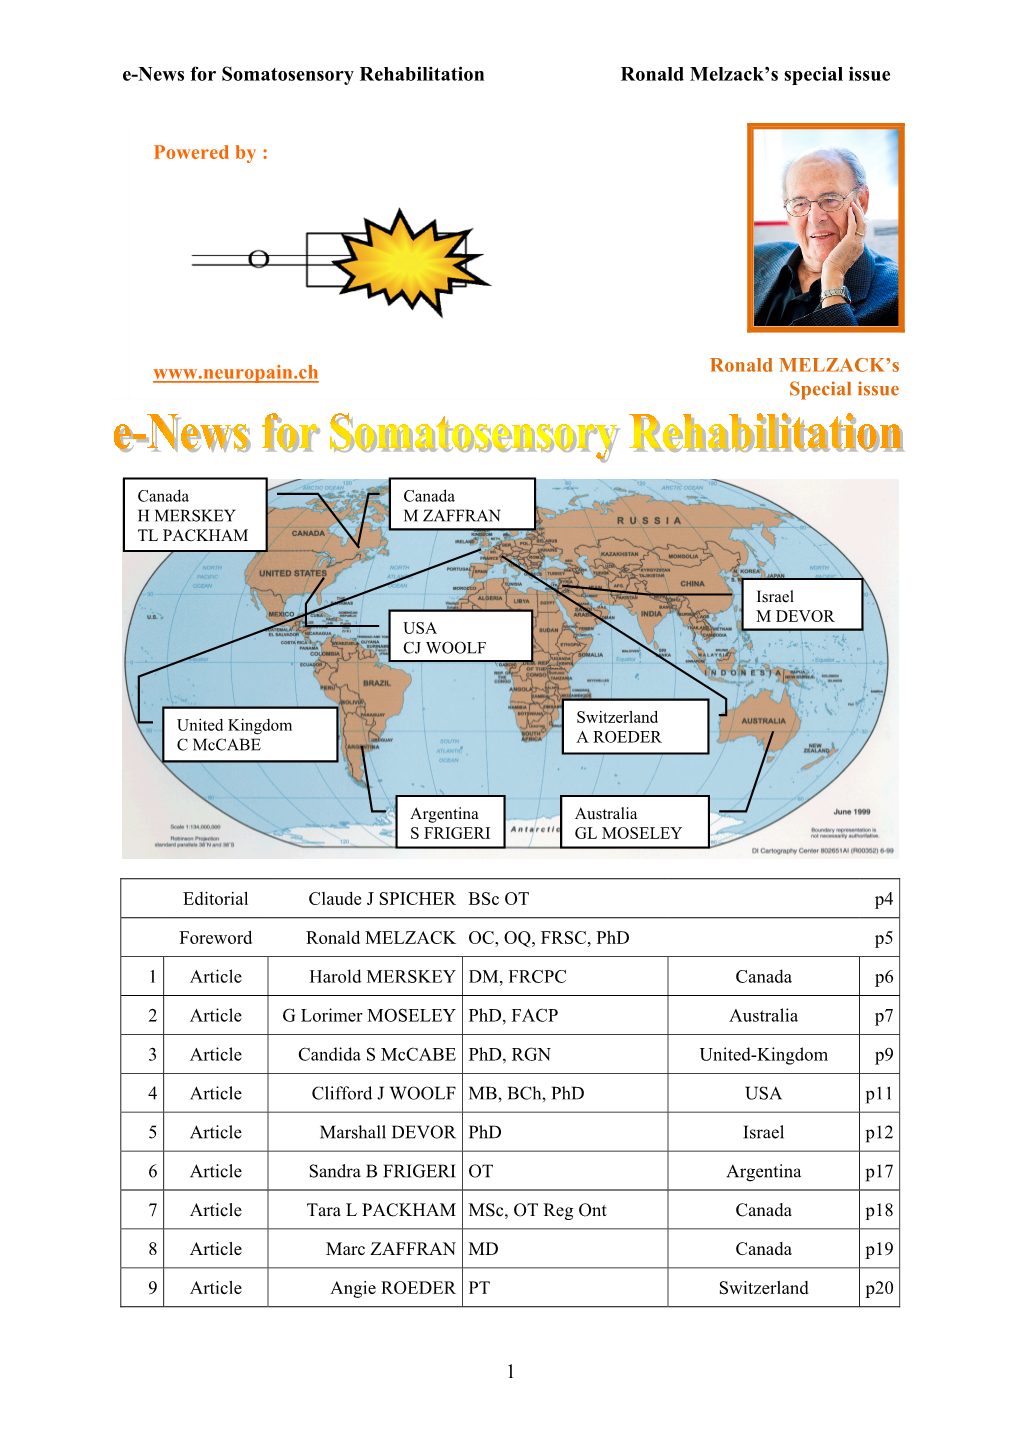 E-News for Somatosensory Rehabilitation Ronald Melzack’S Special Issue